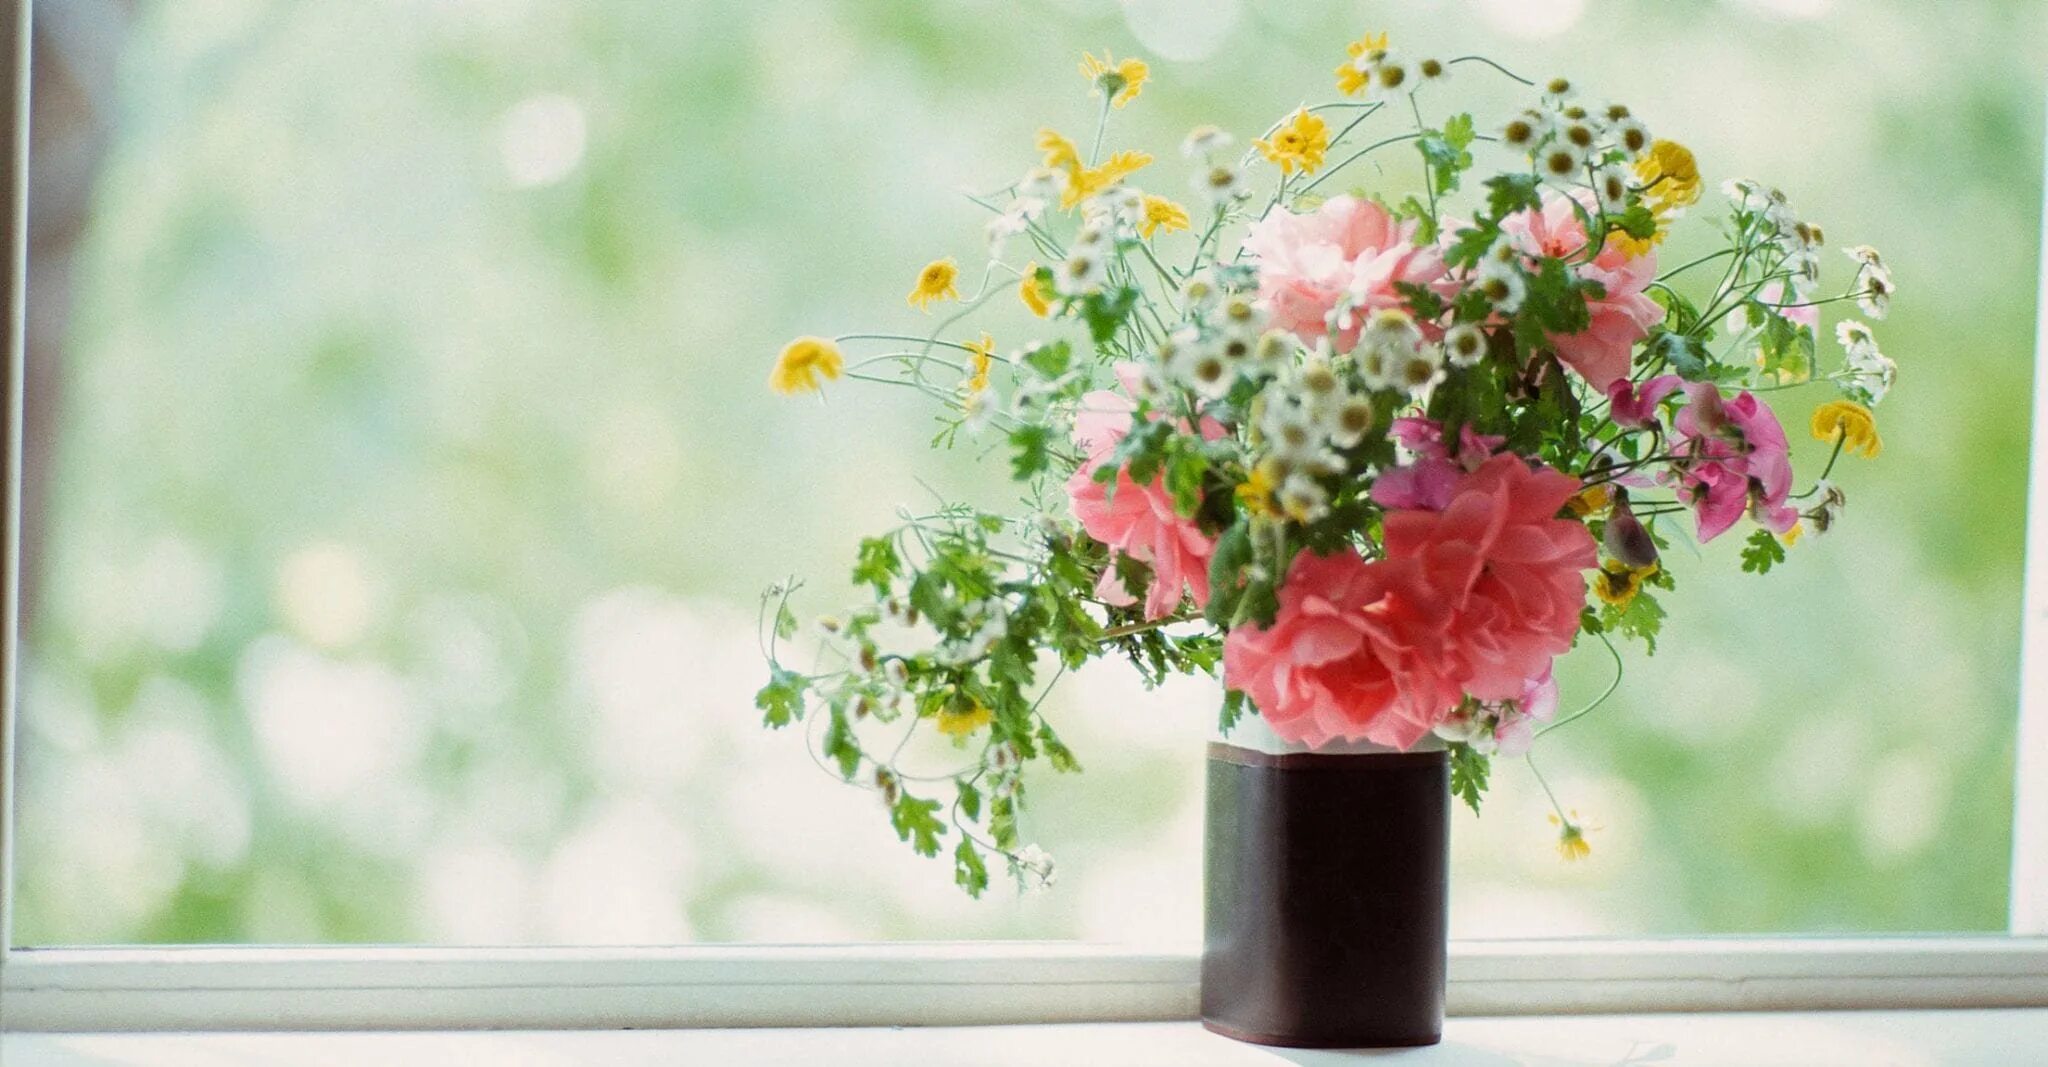 Цветы на подоконнике. Окно в цветах. Подоконник с цветами. Весенние цветы на окне.